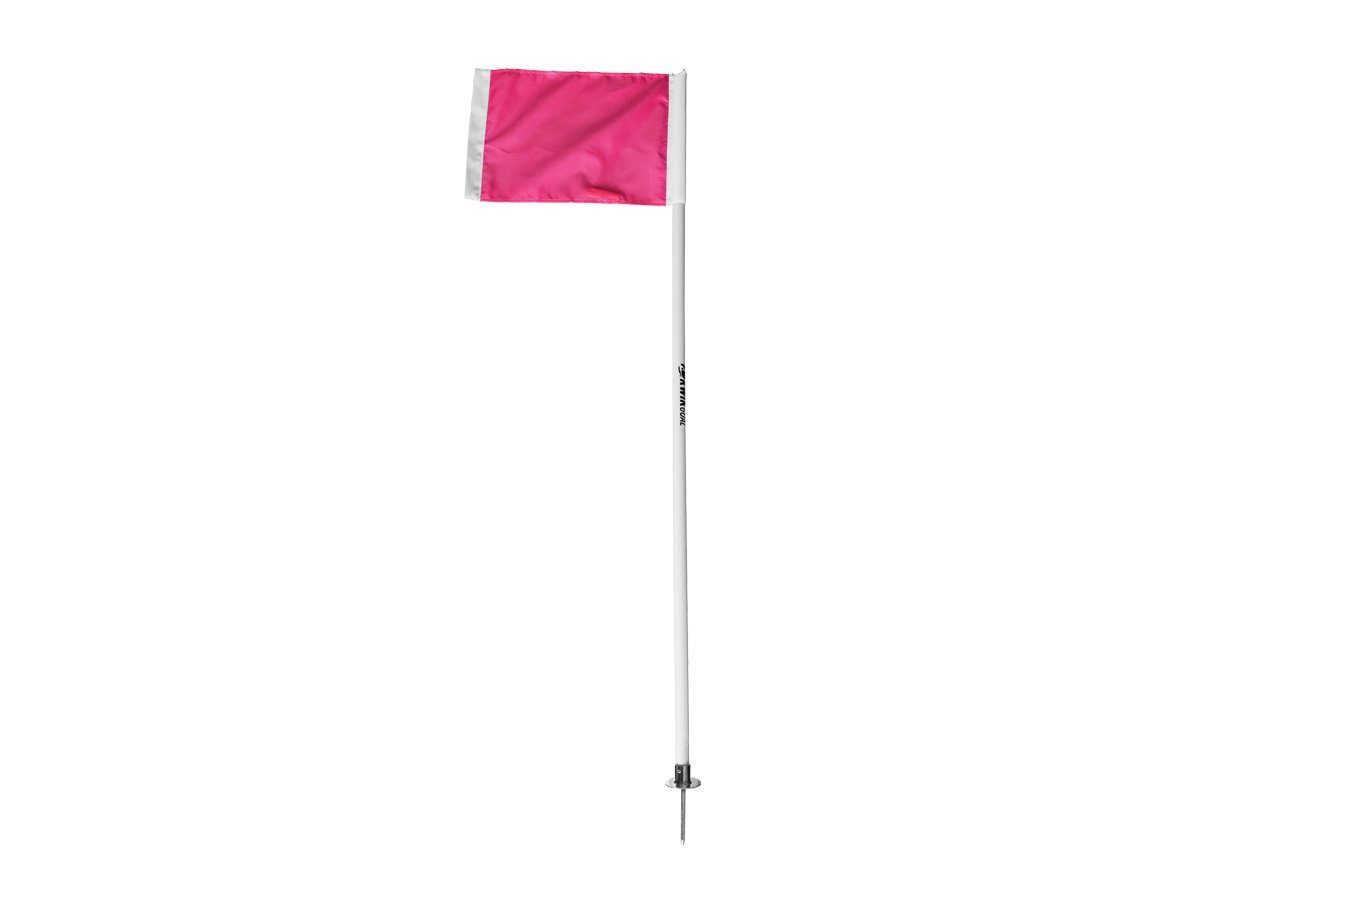 Kwikgoal Official Corner Flags (set of 4) | 6B520 Field equipment Kwikgoal Pink 